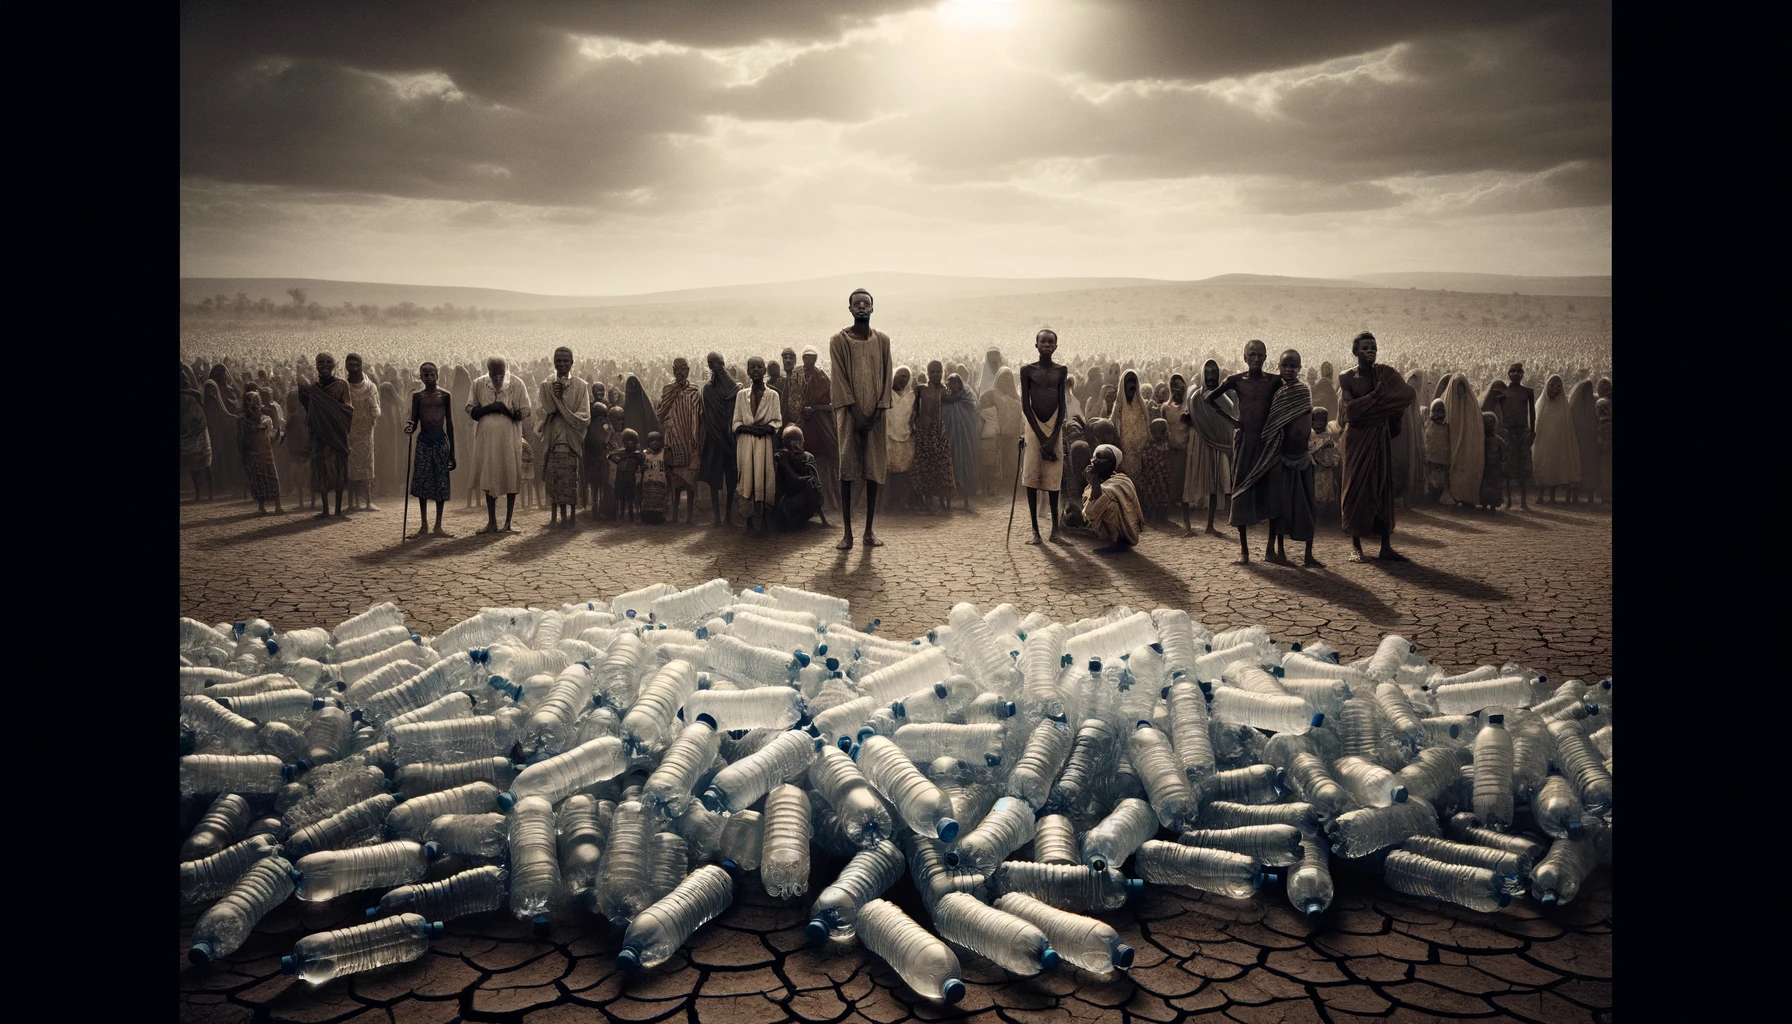 plastic-water-bottles-for-famine-hit-regions-gaza-israel-sudan-csdn